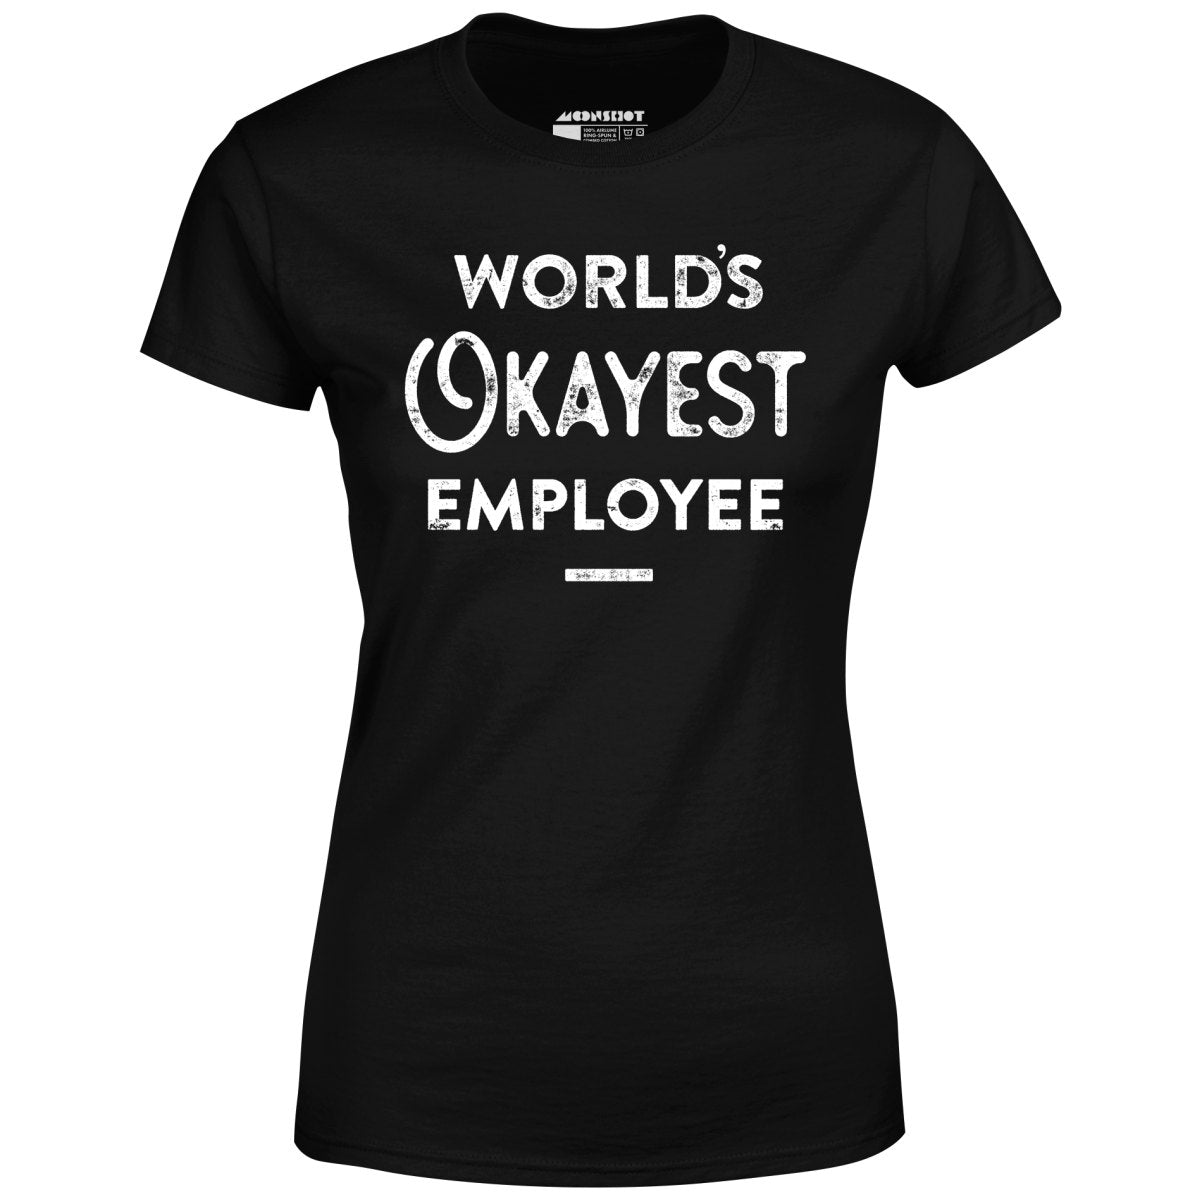 World's Okayest Employee - Women's T-Shirt